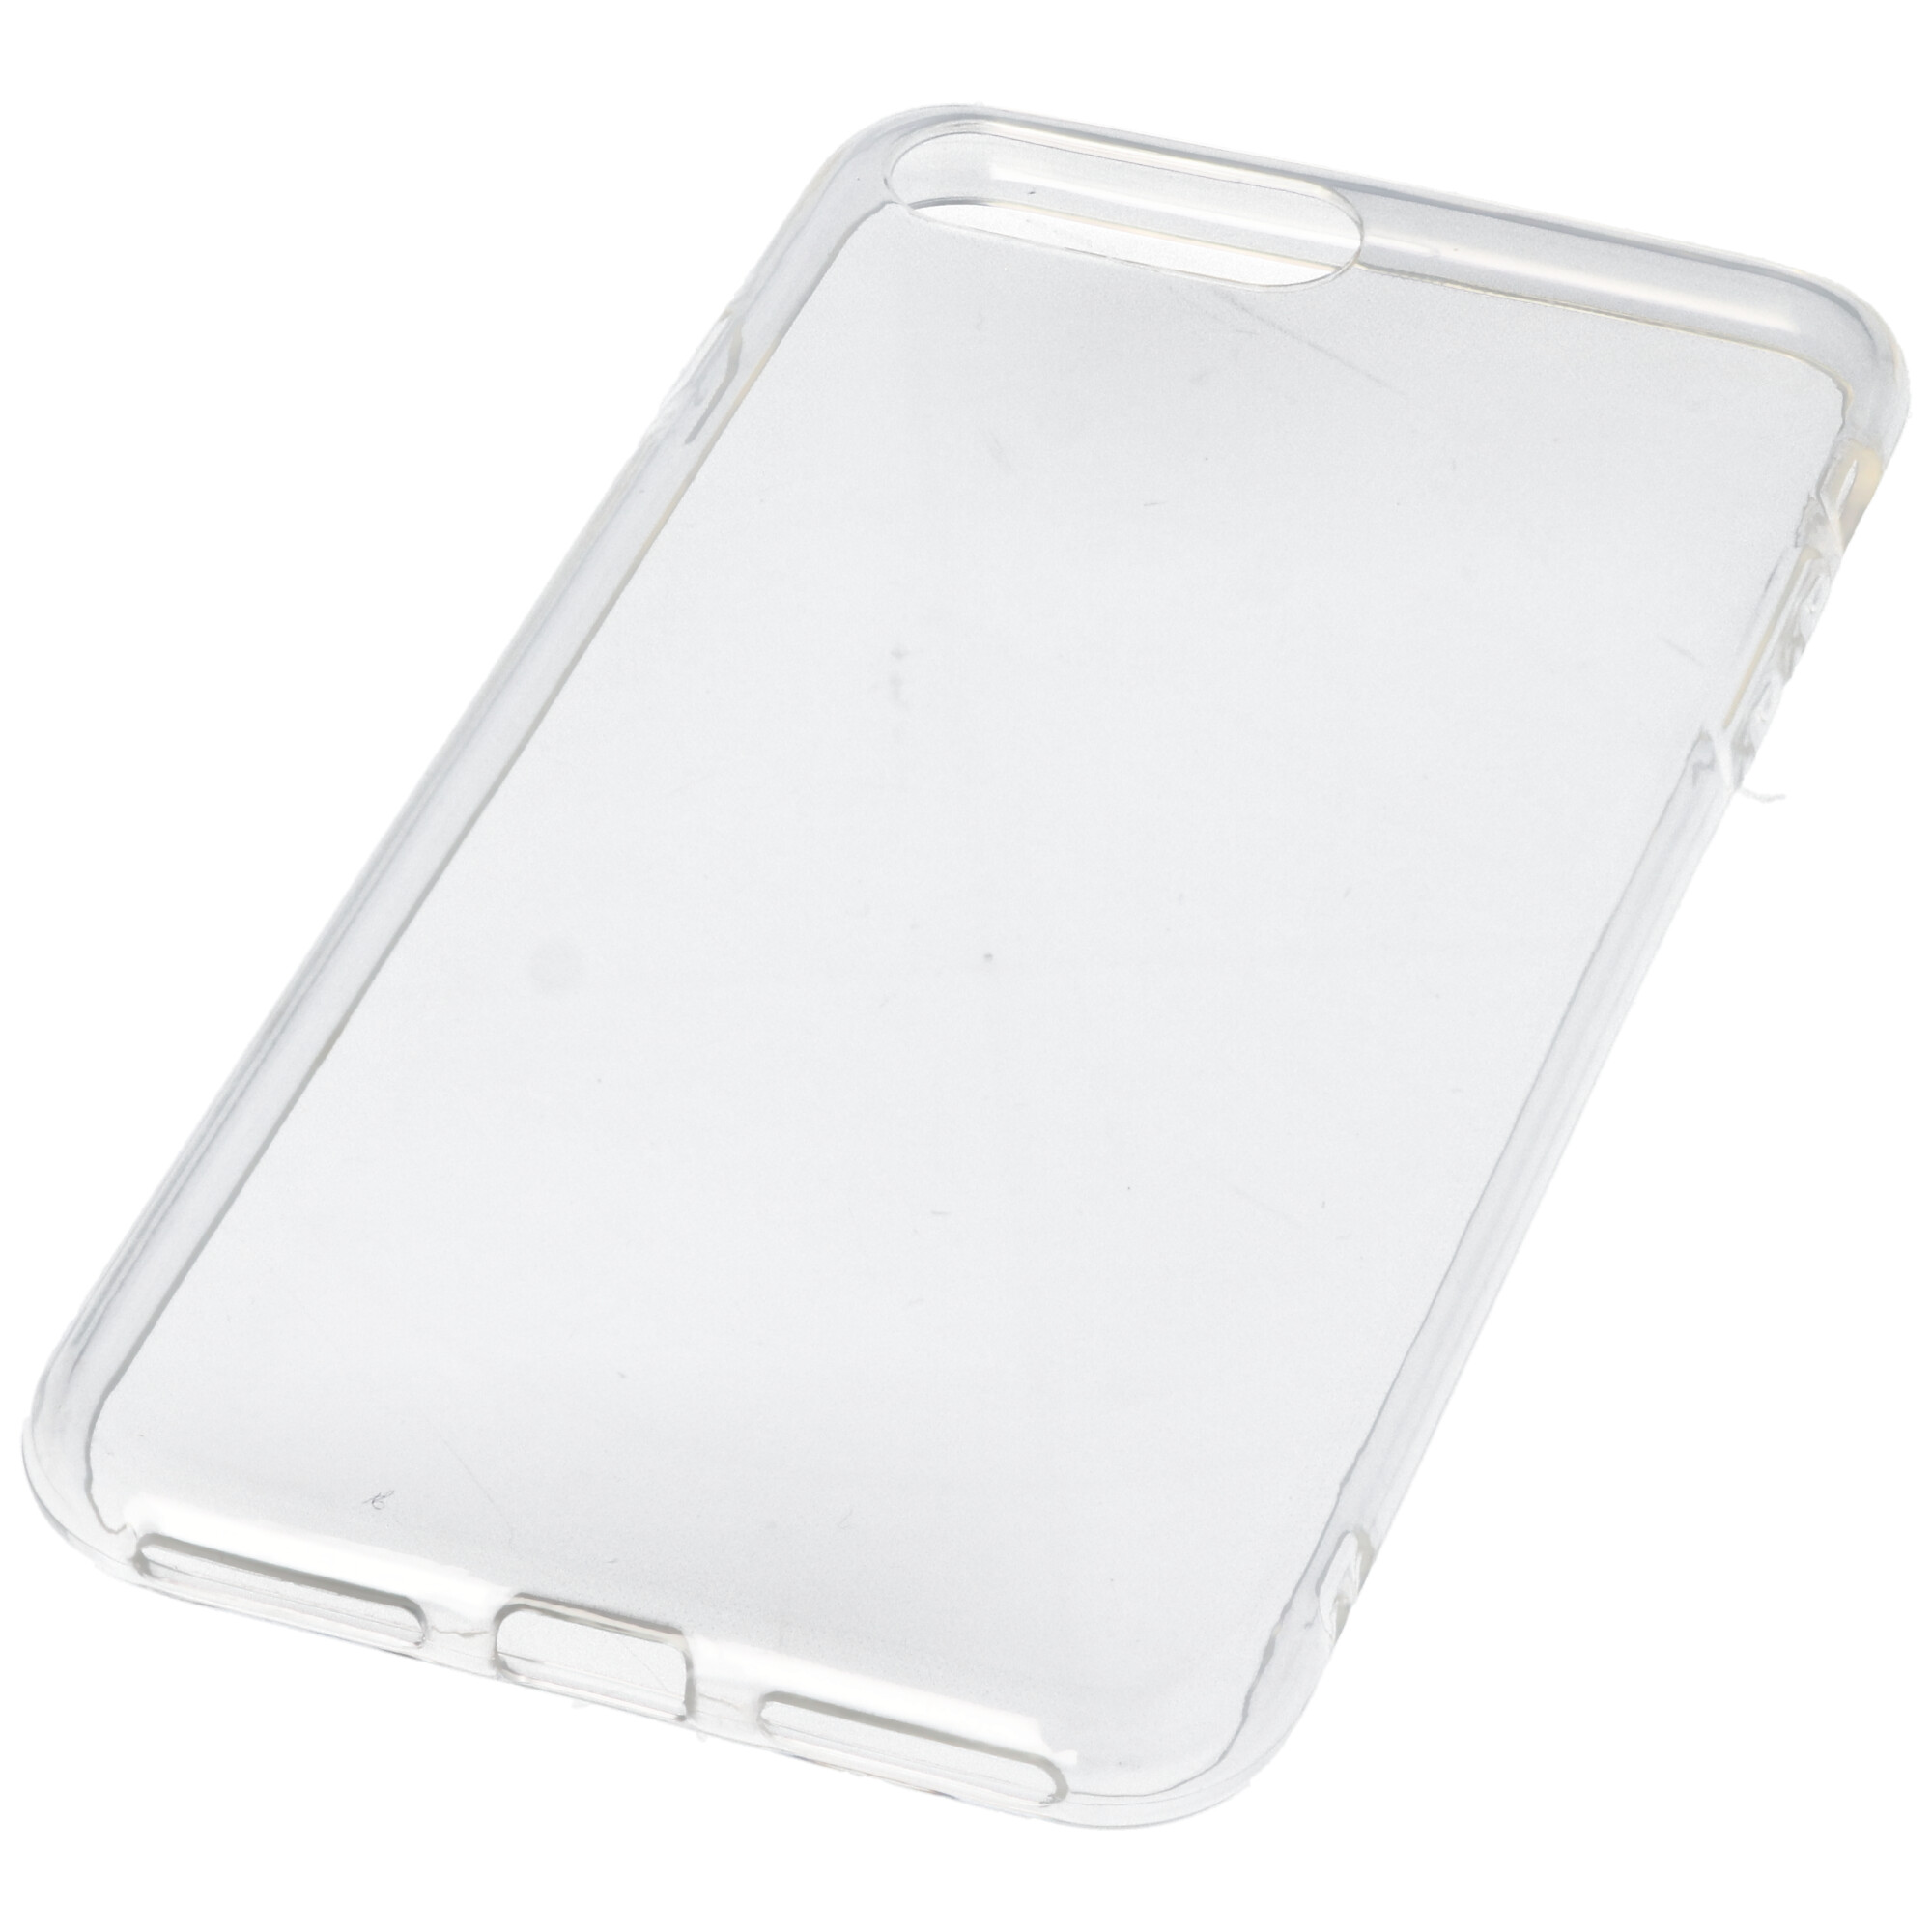 Hülle passend für Apple iPhone 7 Plus / iPhone 8 Plus - transparente Schutzhülle, Anti-Gelb Luftkissen Fallschutz Silikon Handyhülle robustes TPU Case